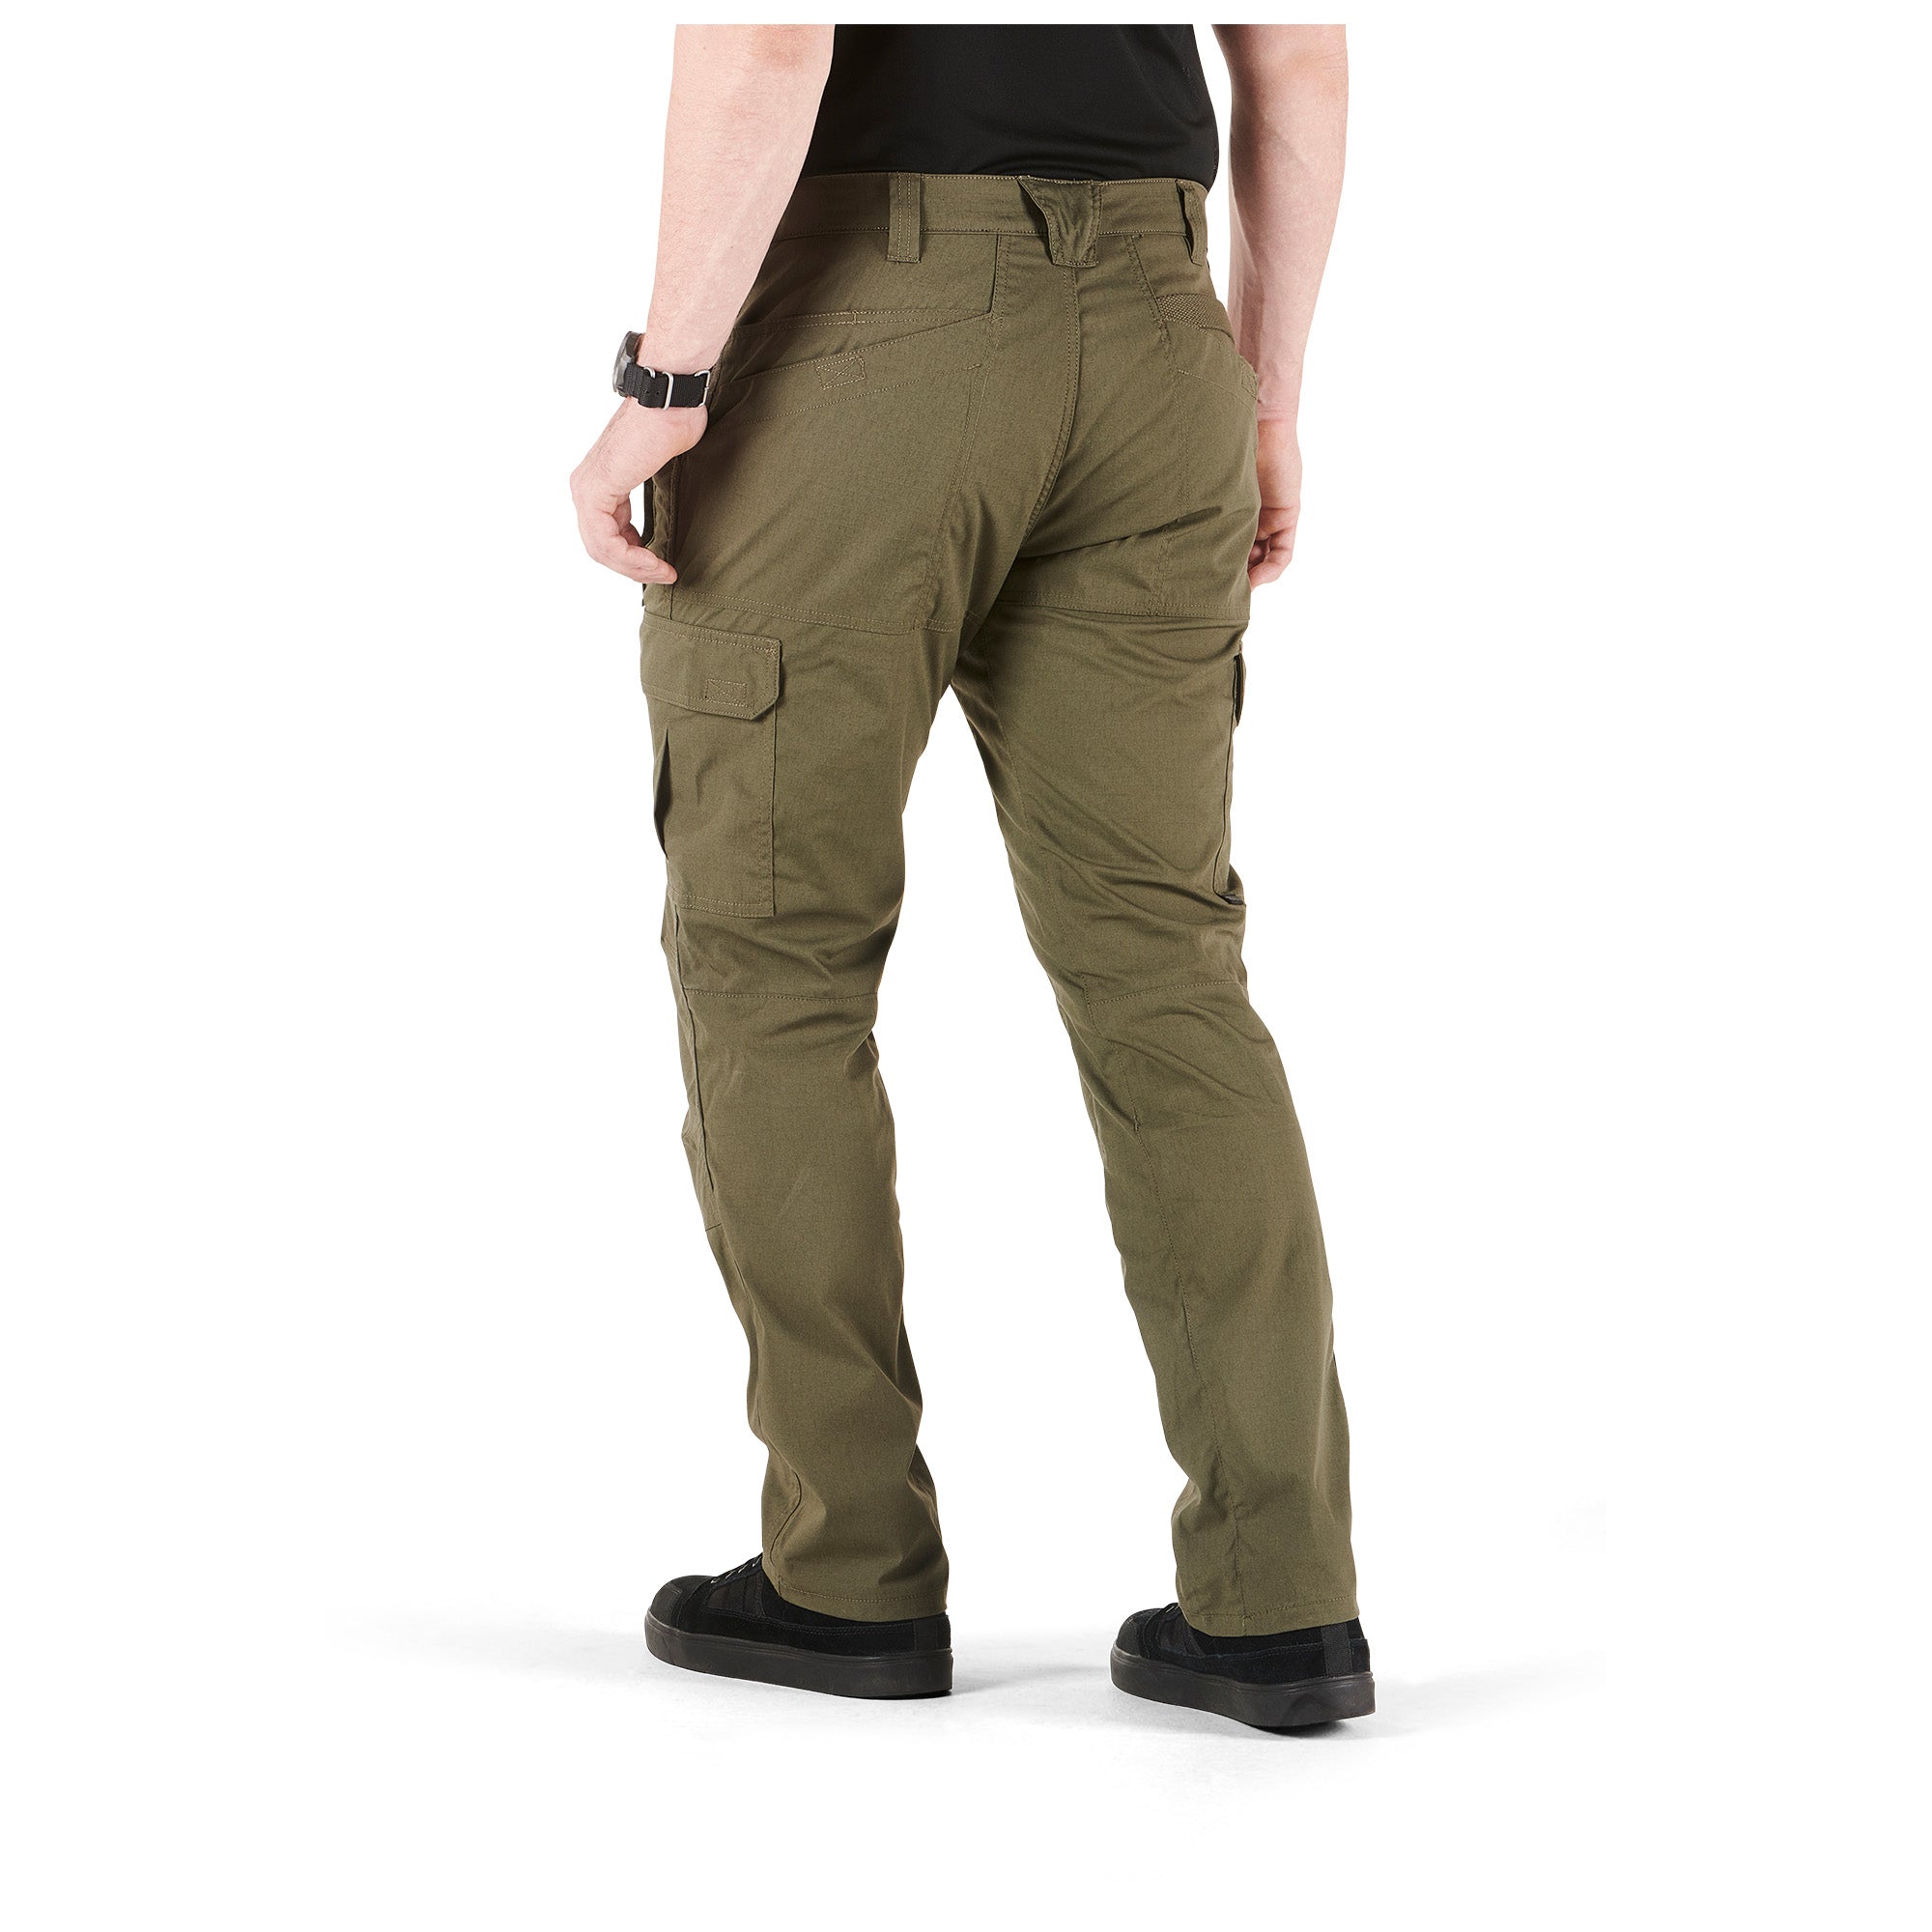 5.11 Tactical ABR Pro Pants Ranger Green